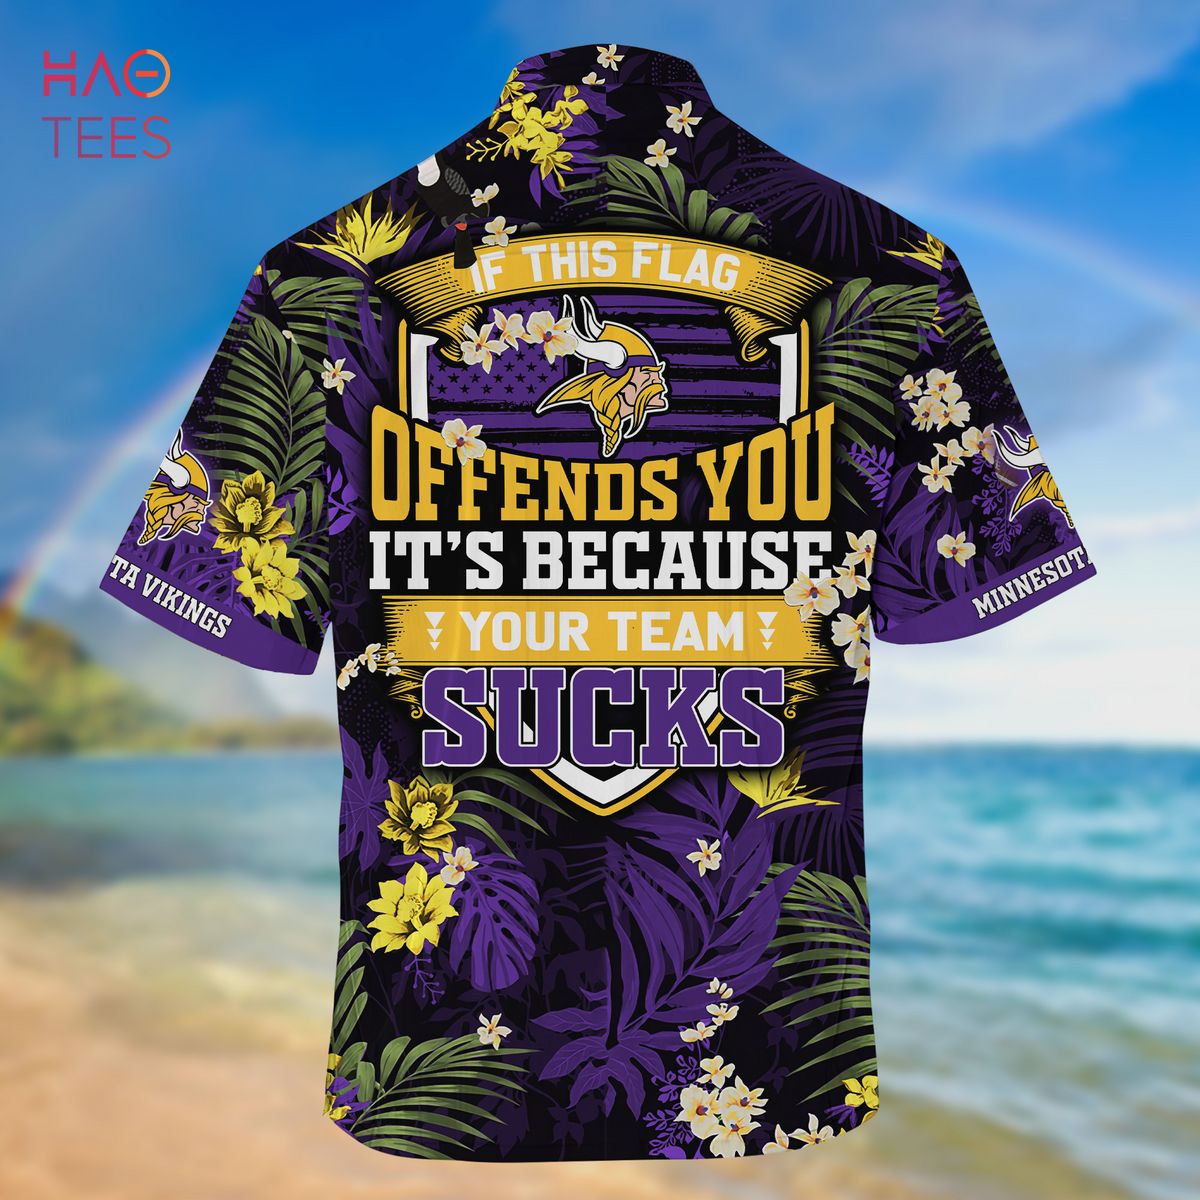 Minnesota Twins MLB For Sports Fan 3D Hawaiian Beach Shirt - Senprintmart  Store